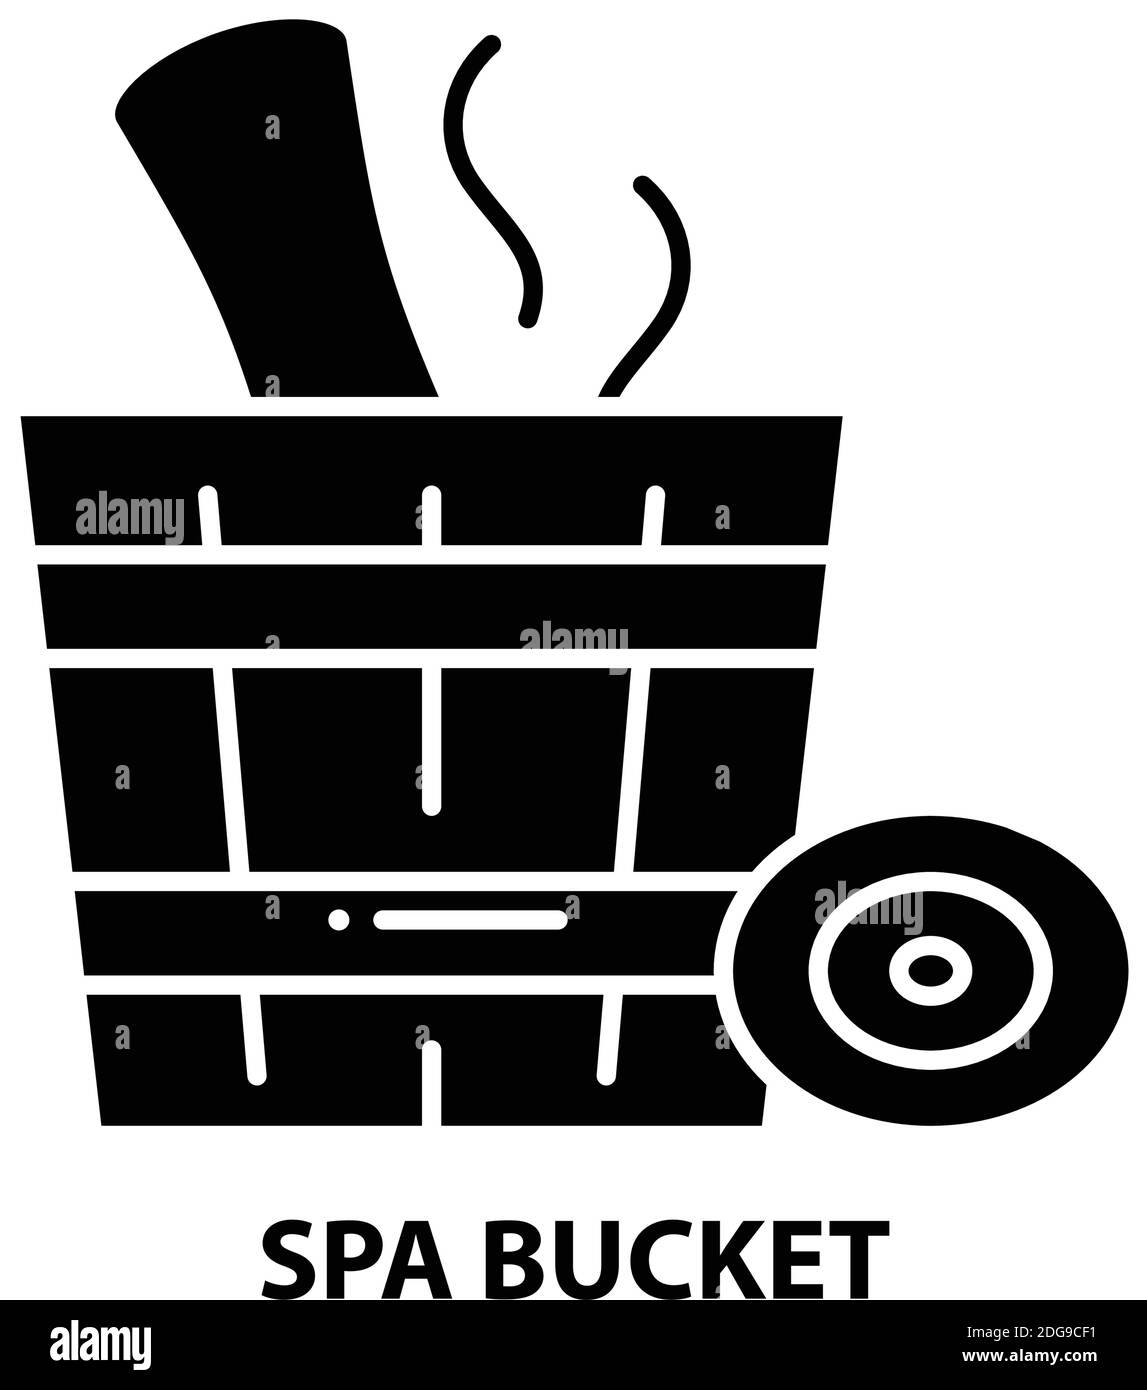 spa bucket icon, black vector sign with editable strokes, concept illustration Stock Vector